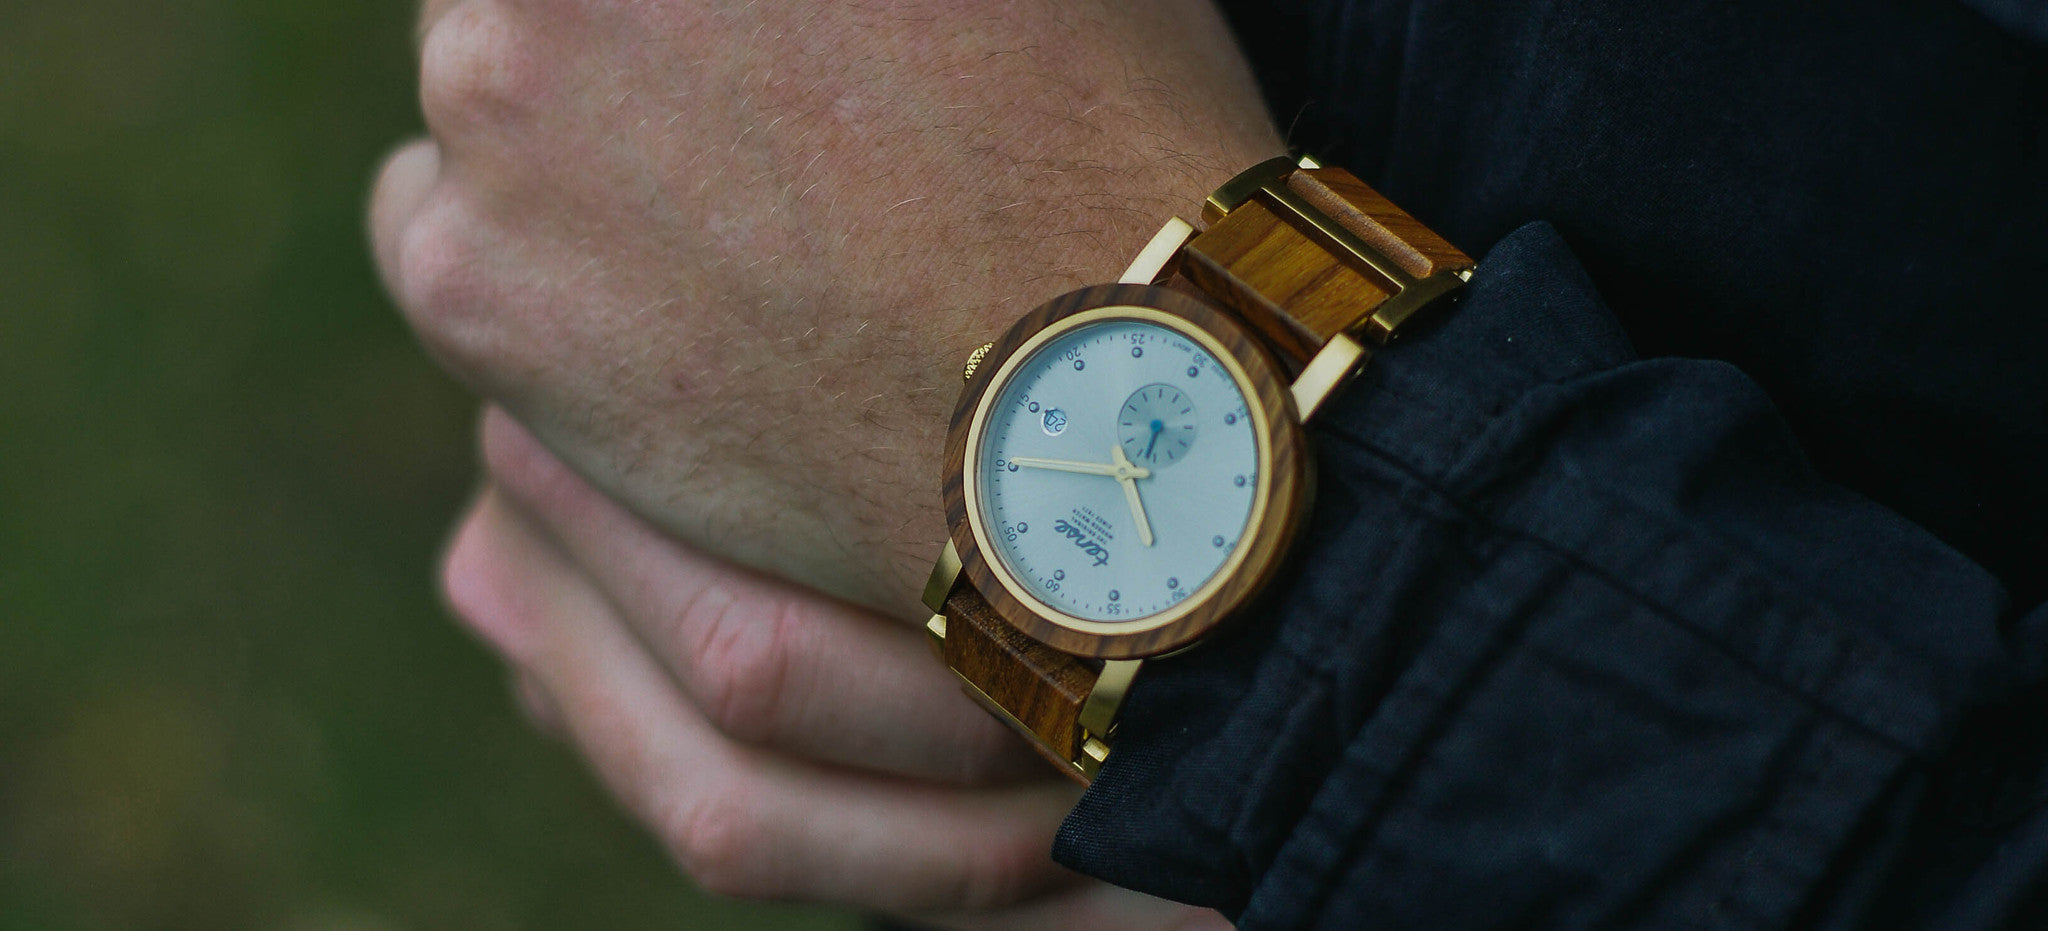 Tense Watches - Hudson Watch